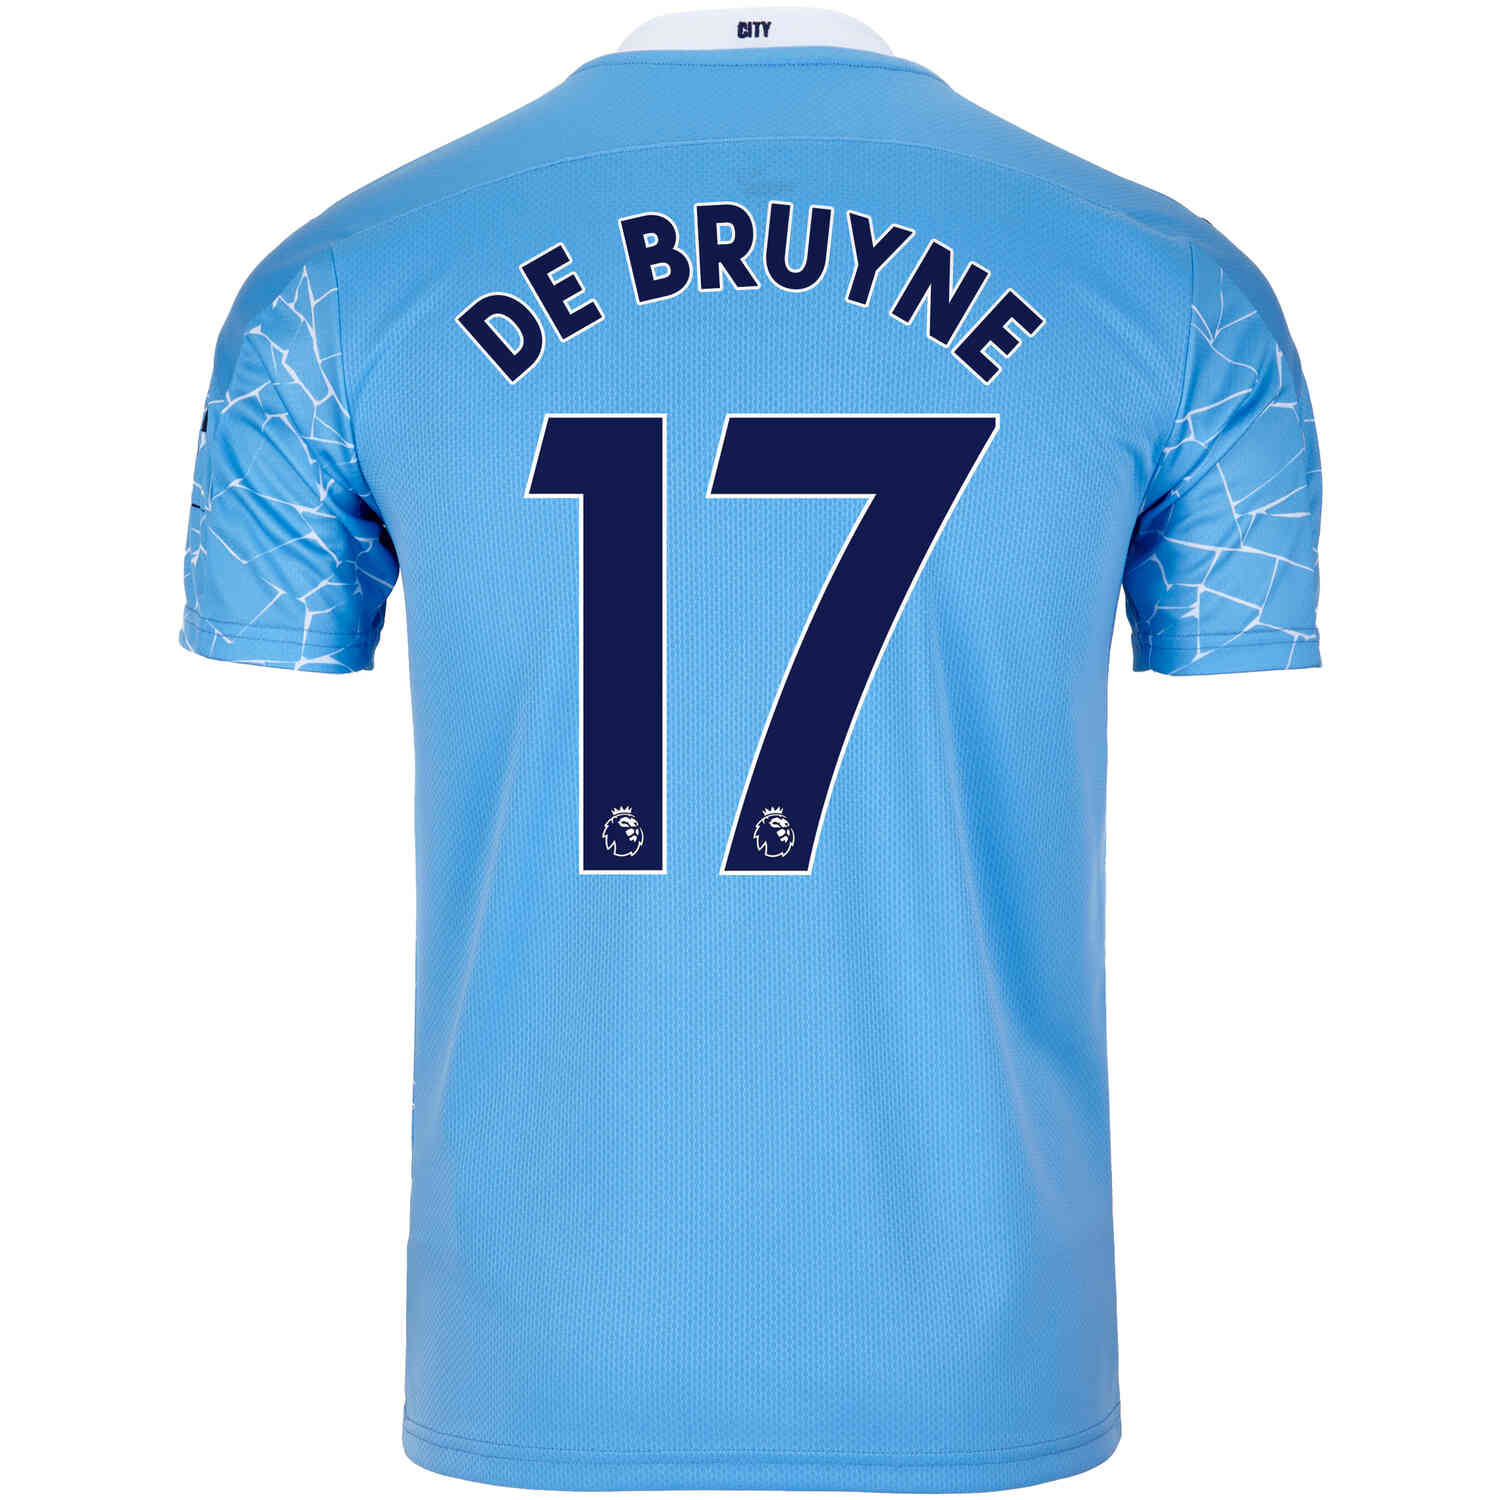 2020/21 Kevin De Bruyne Manchester City 